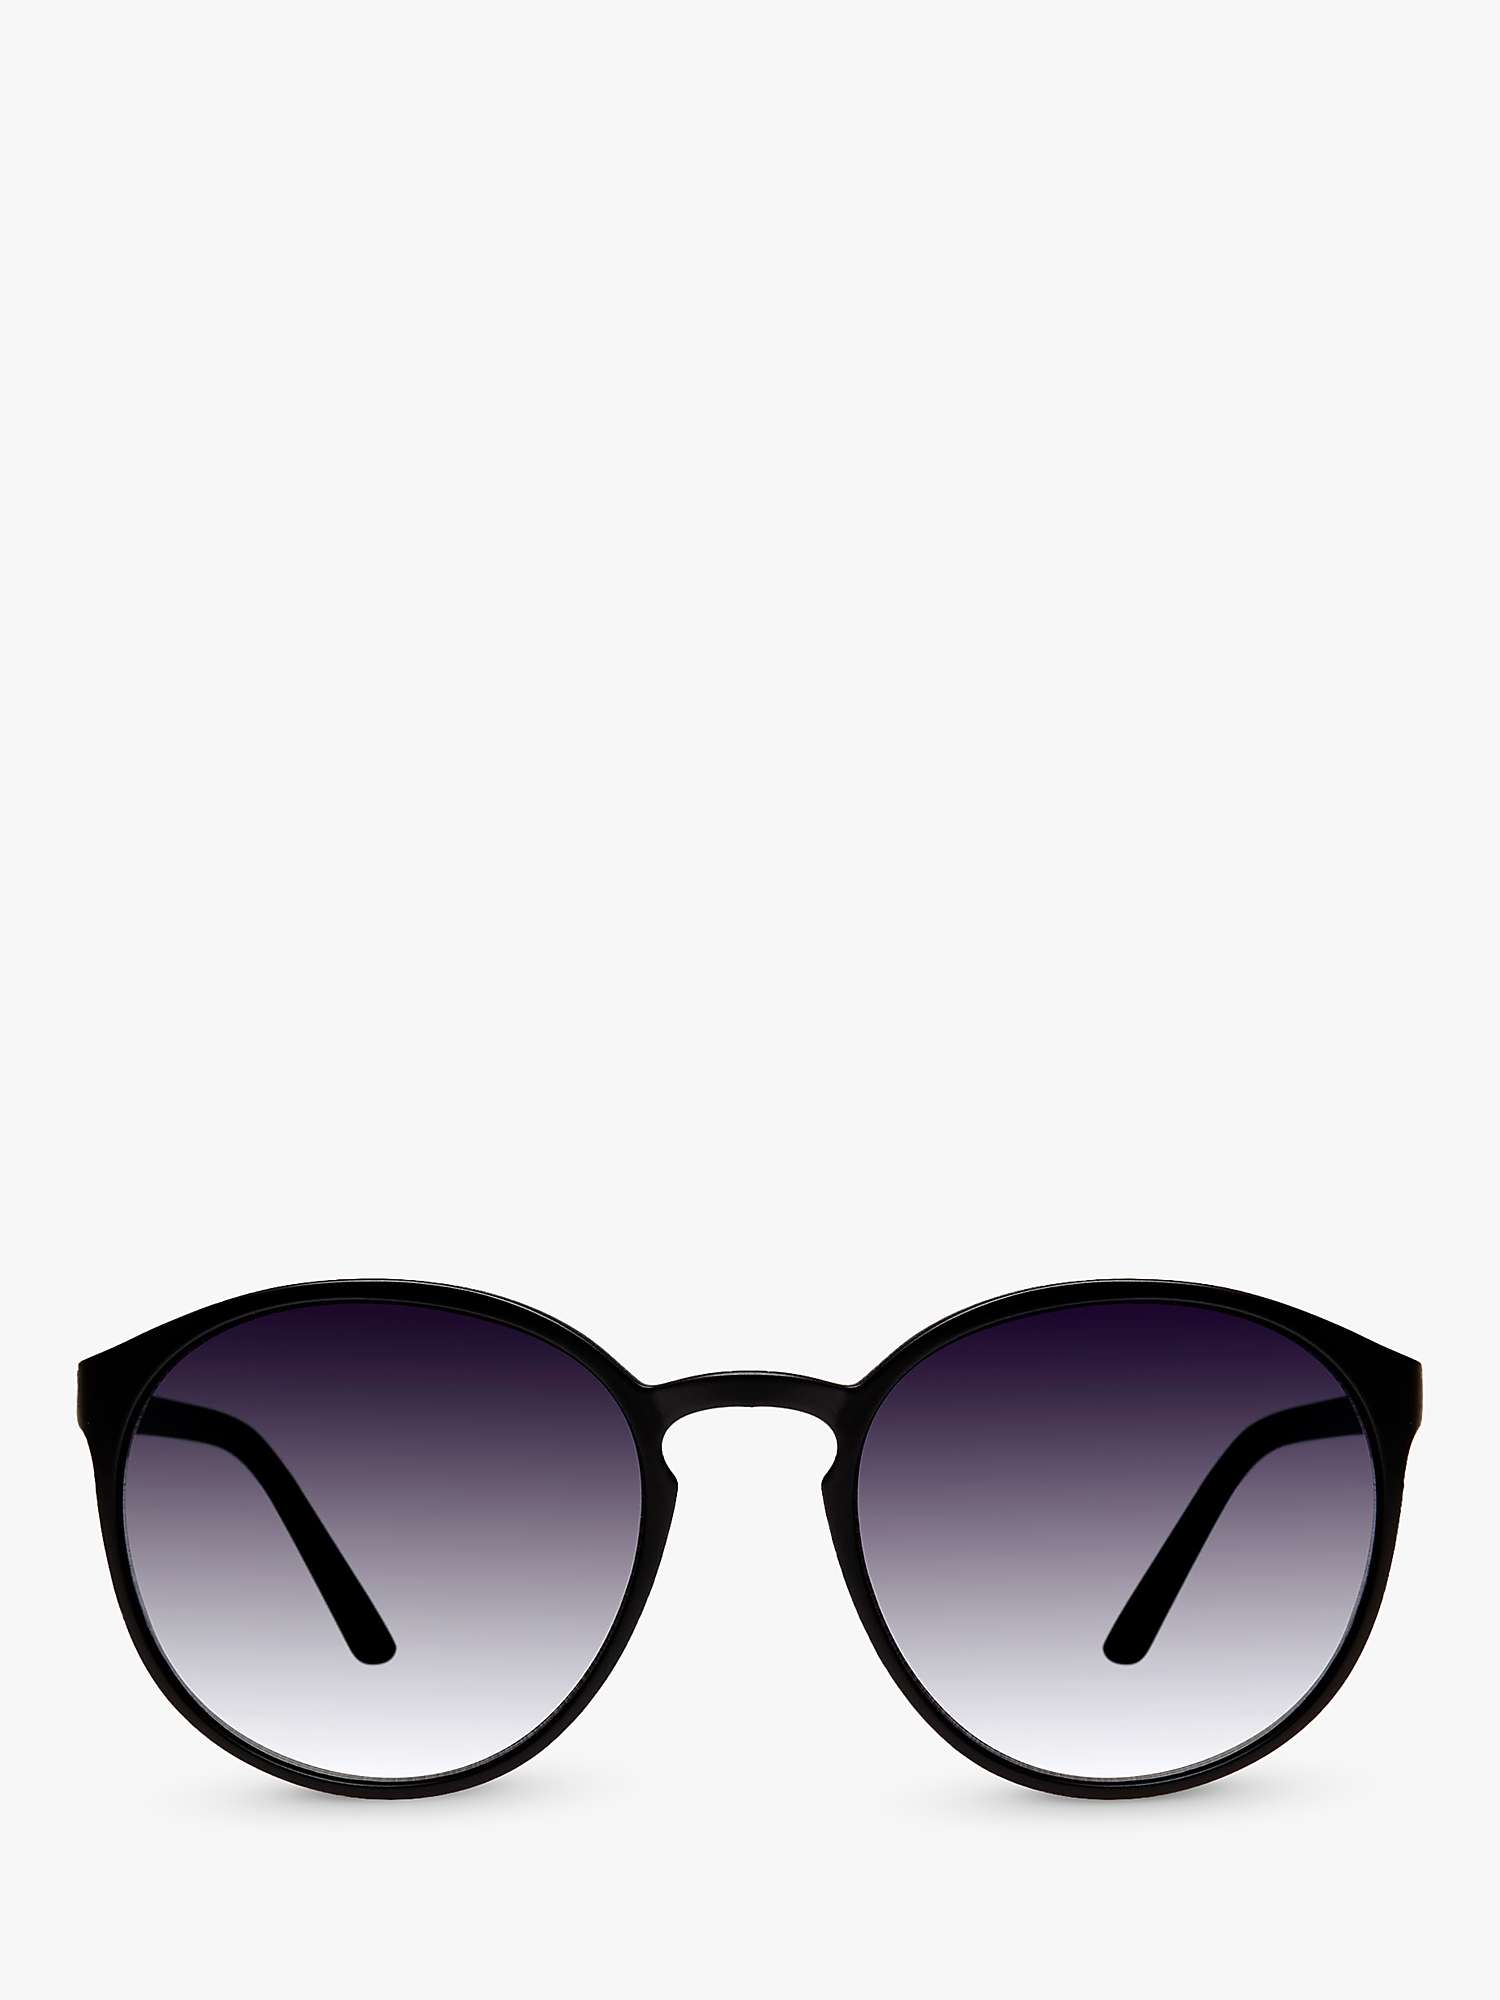 Buy Le Specs L5000170 Unisex Round Sunglasses, Black/Grey Gradient Online at johnlewis.com